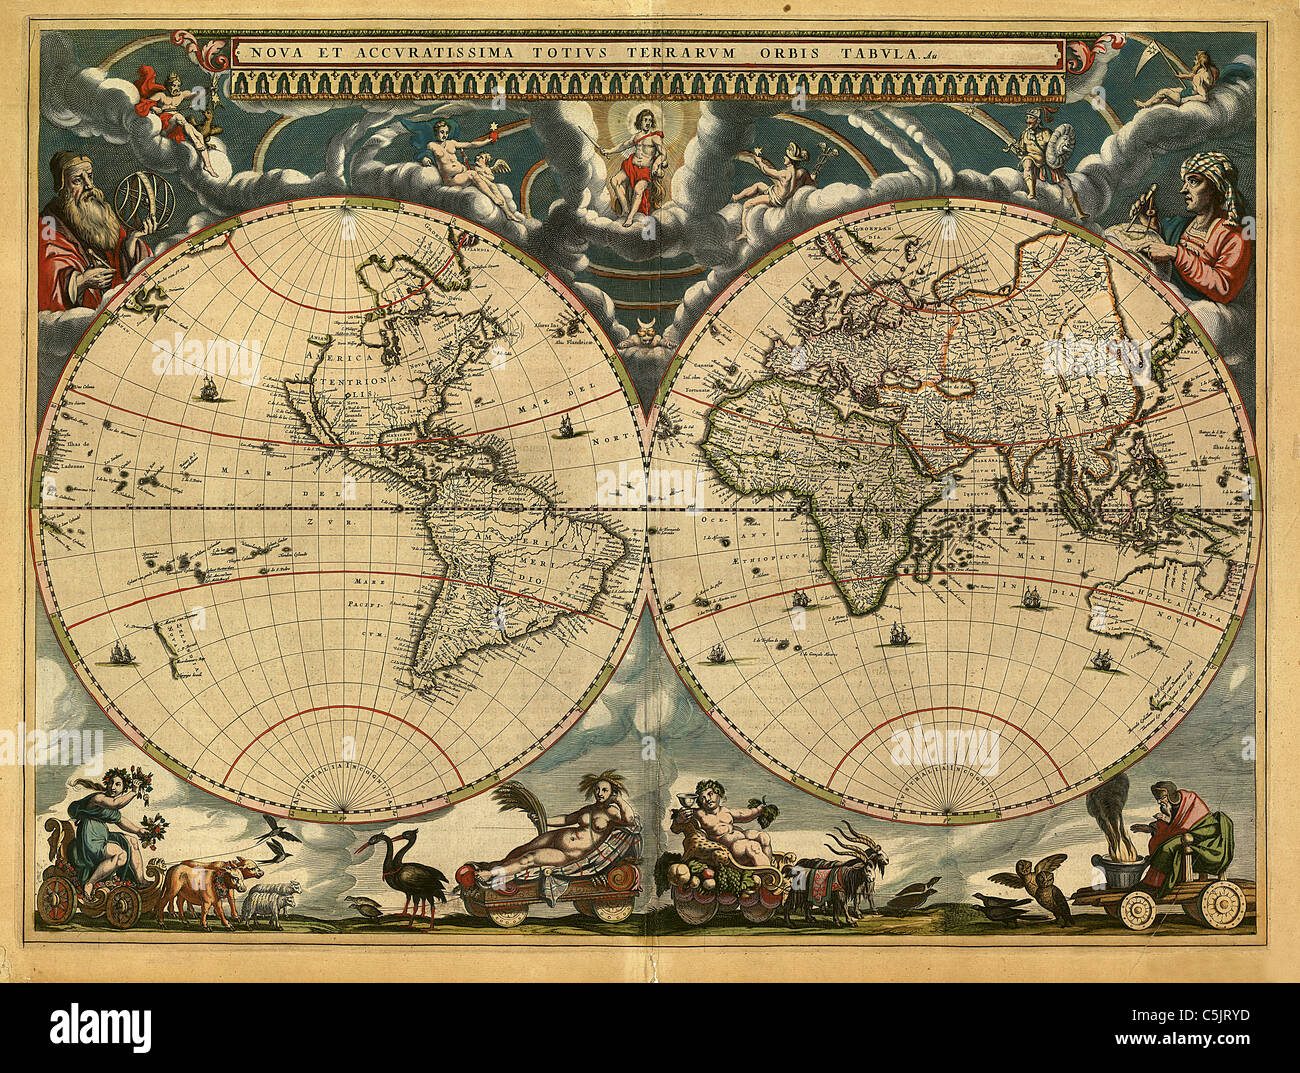 Nova et Accuratissima Totius Terrarum Orbis Tabula - Antique World Map by Joan Blaeu, circa 1664. Stock Photo